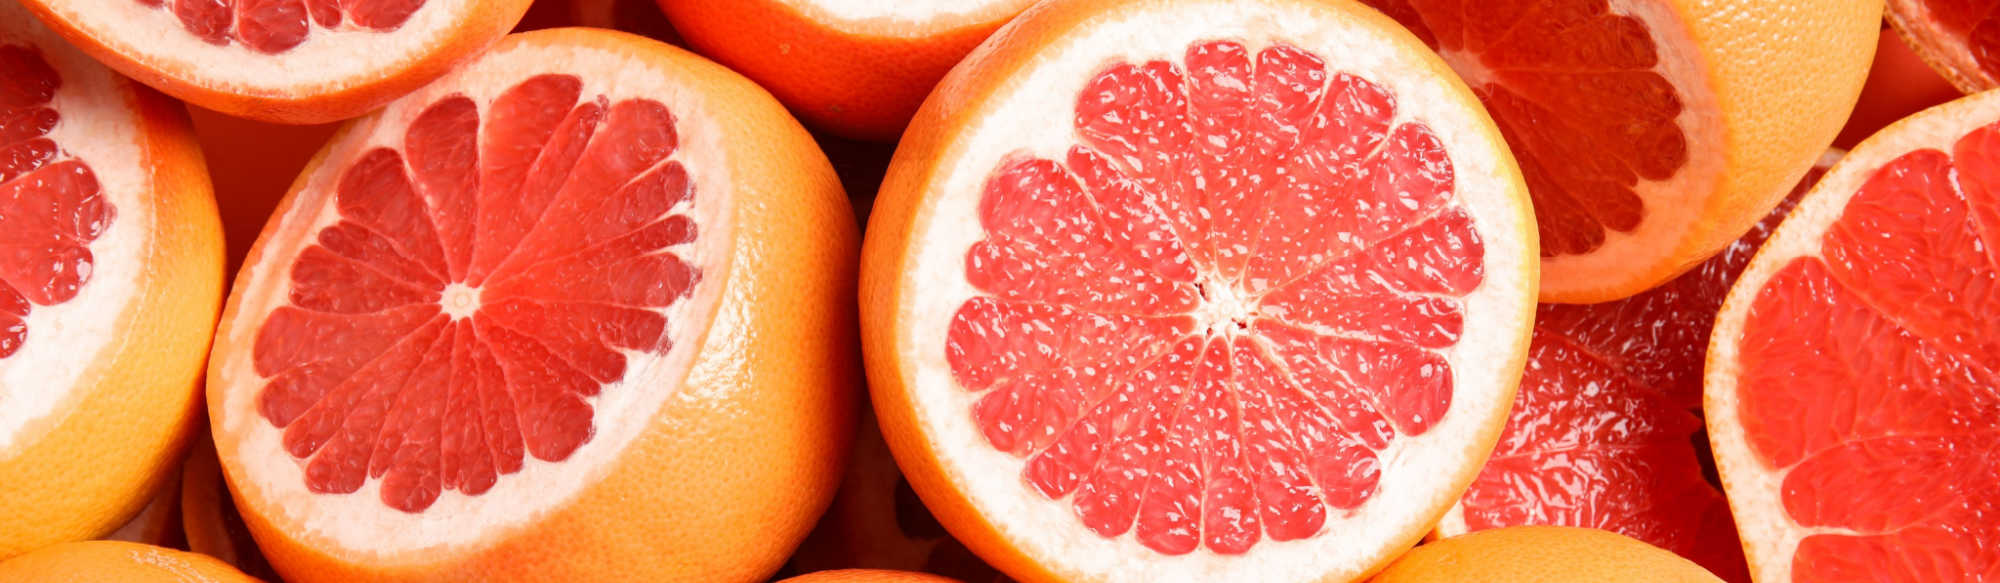 image of grapefruit